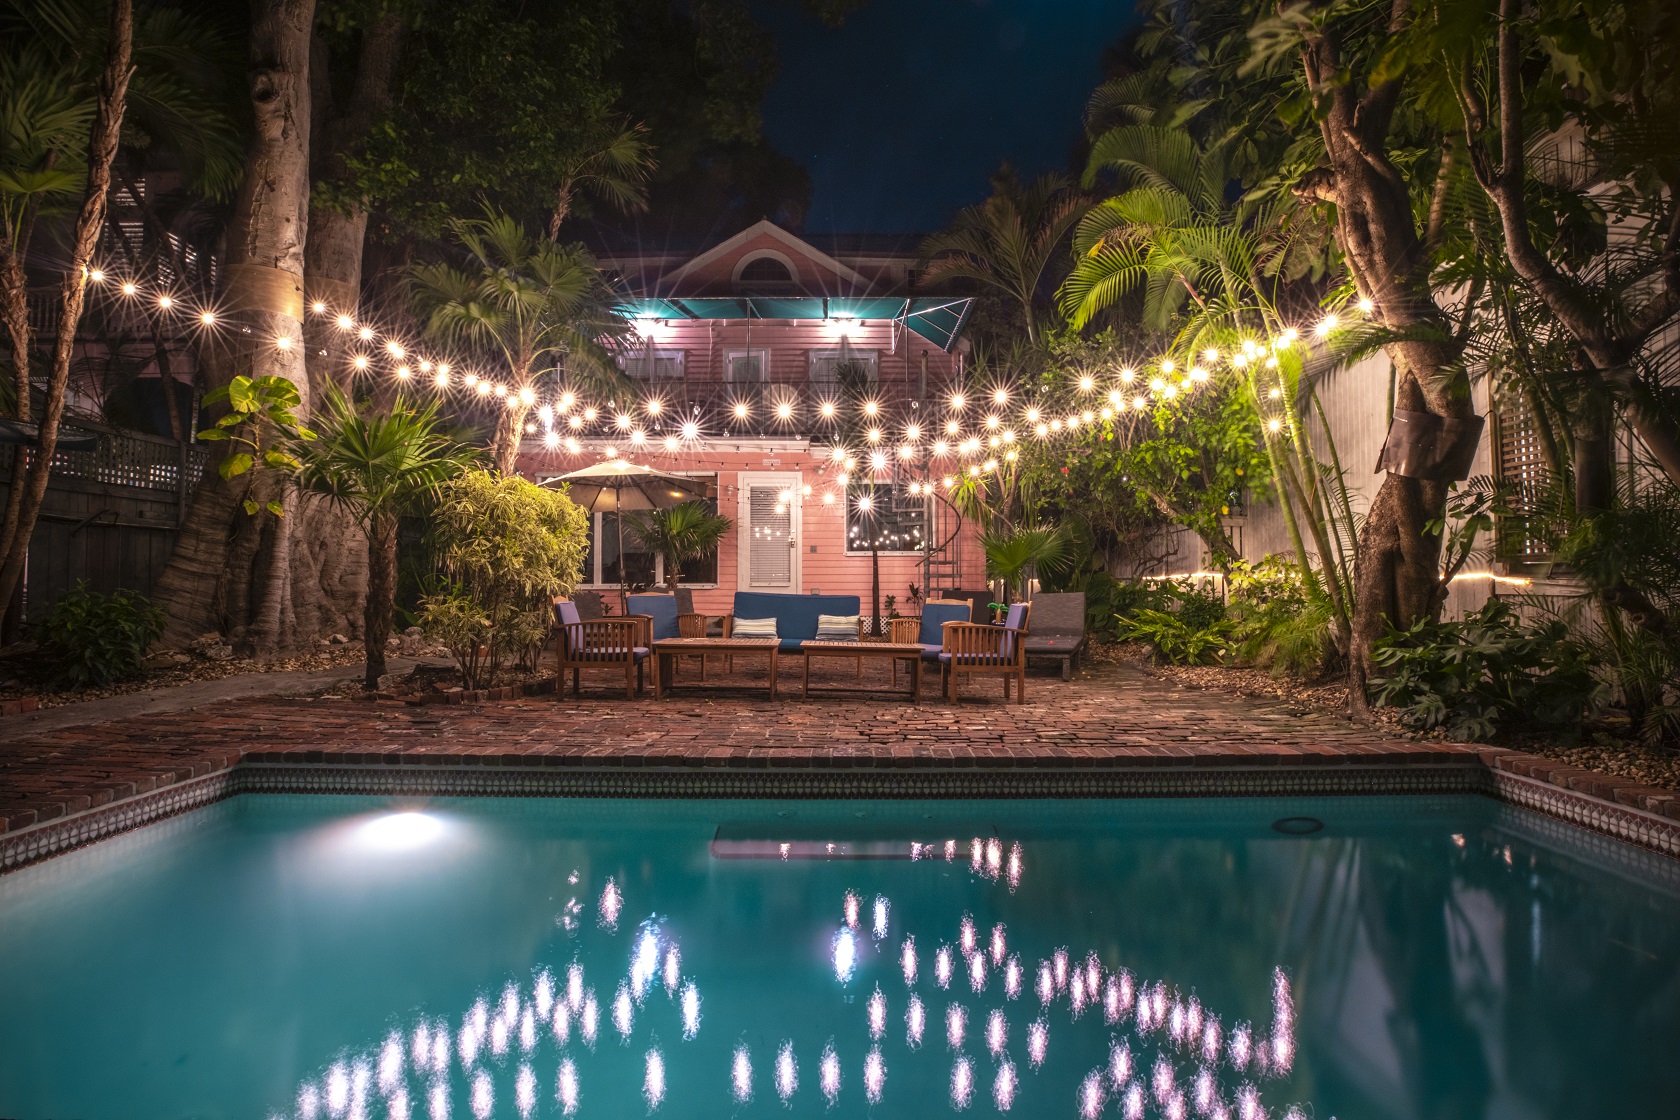 Key West Vacation Rental - William Skelton Home - Backyard pool